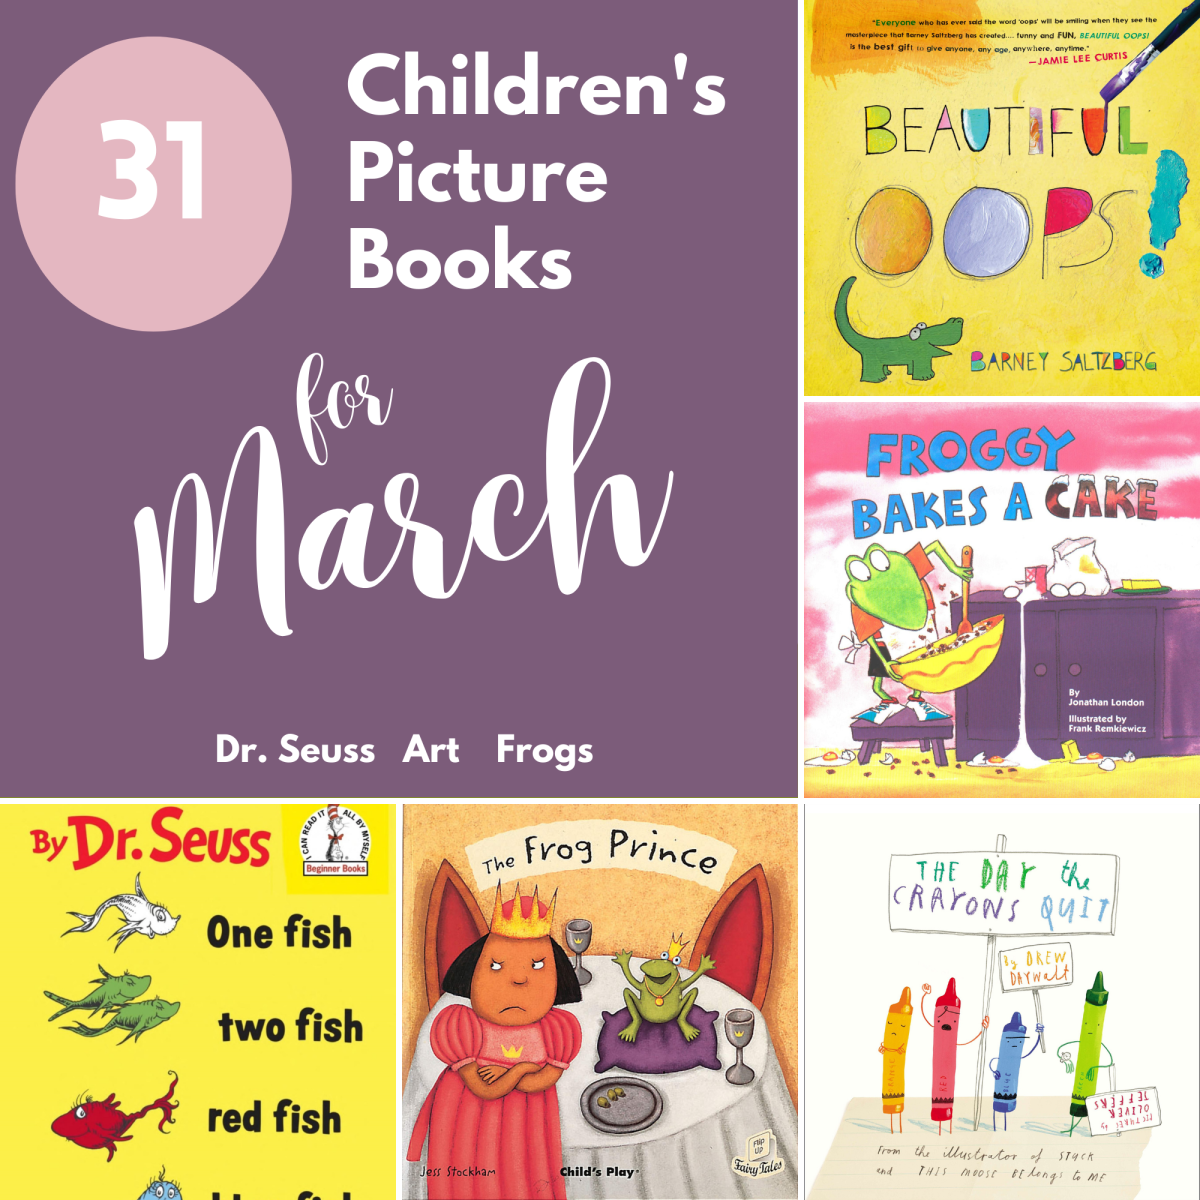 31 Children's Picture Books for March